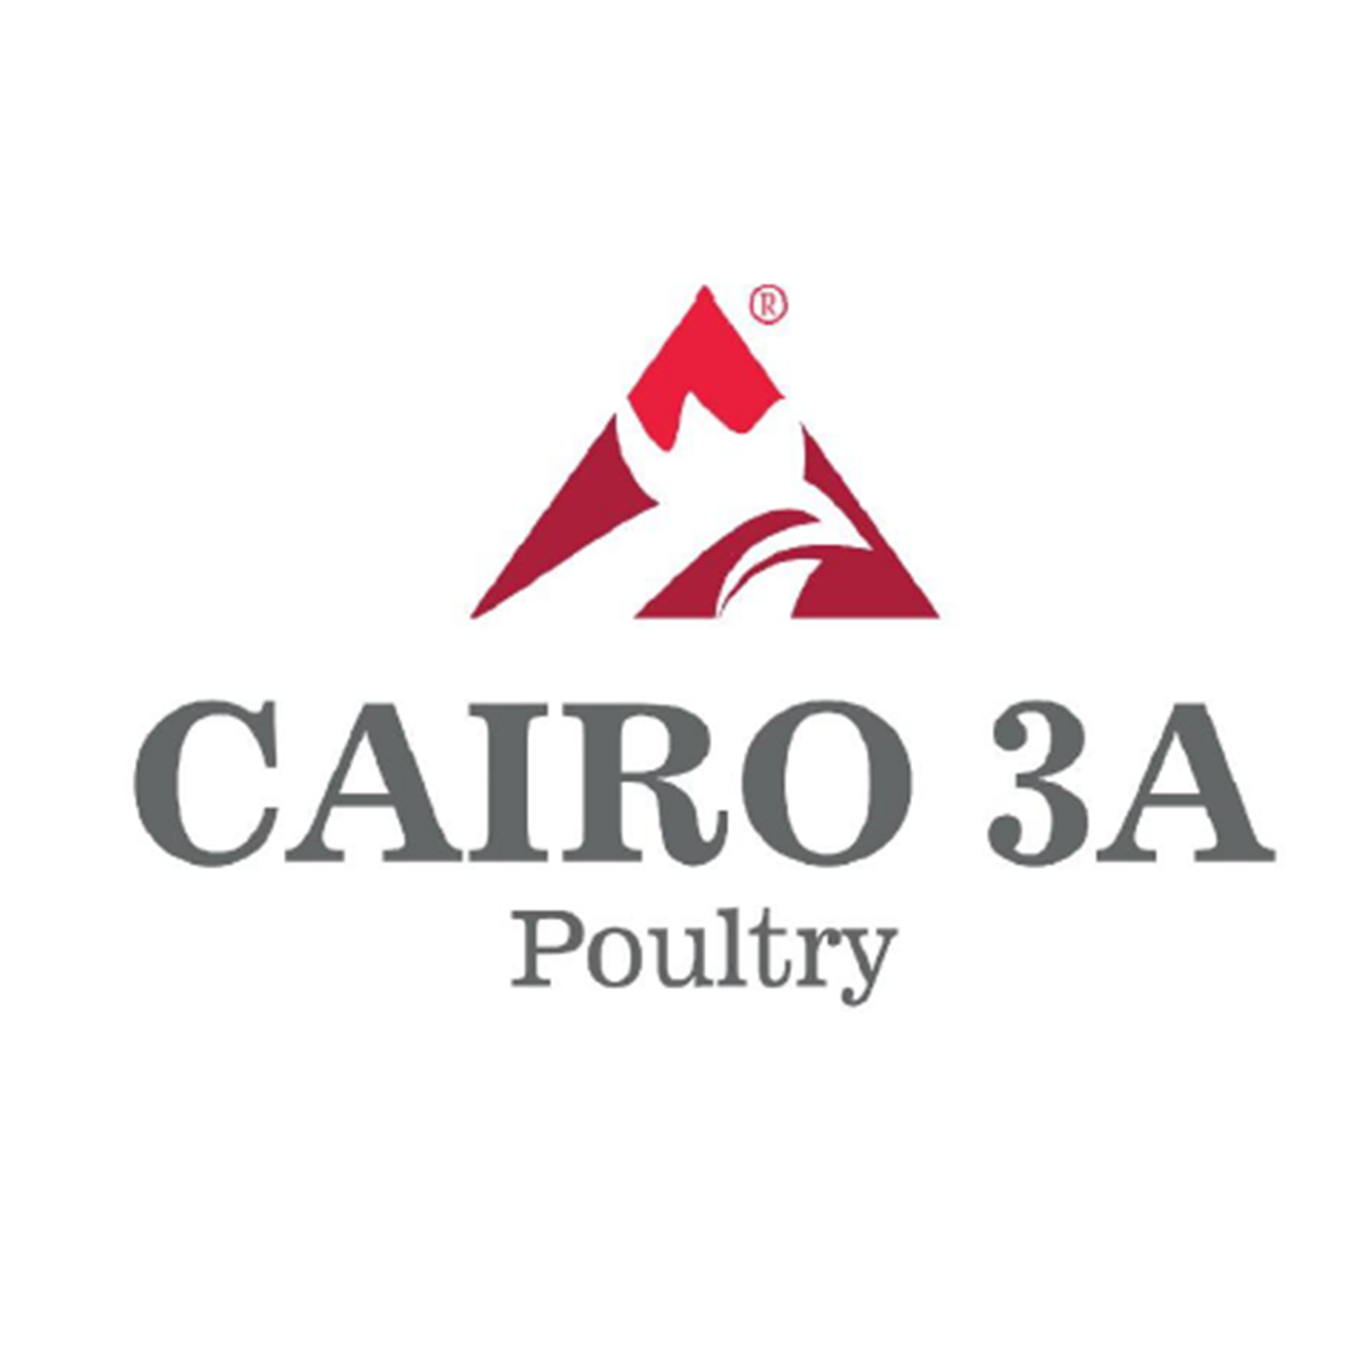 Cairo 3A